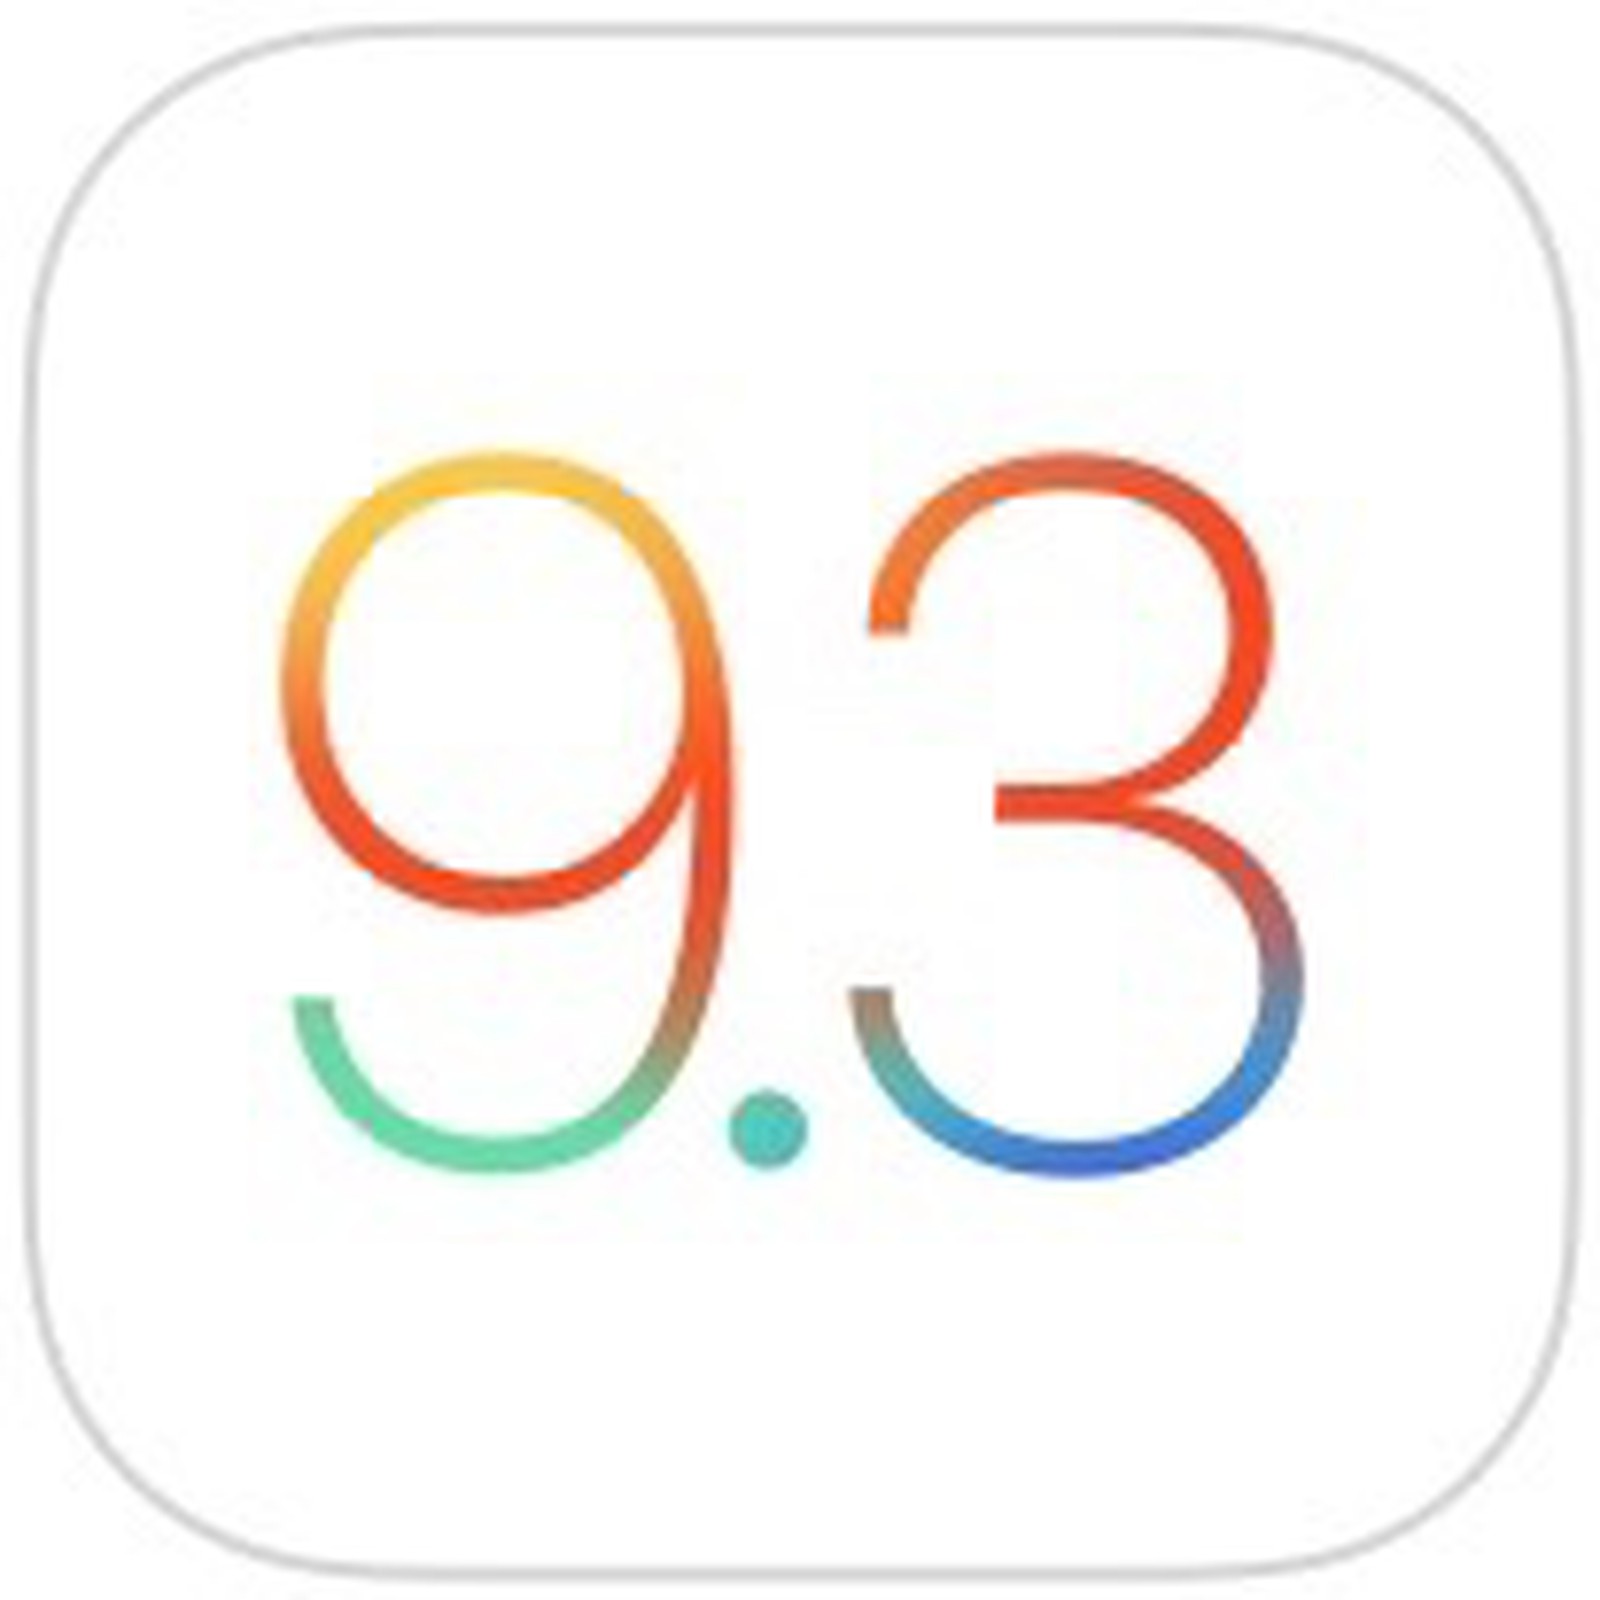 apple ios 15 beta download